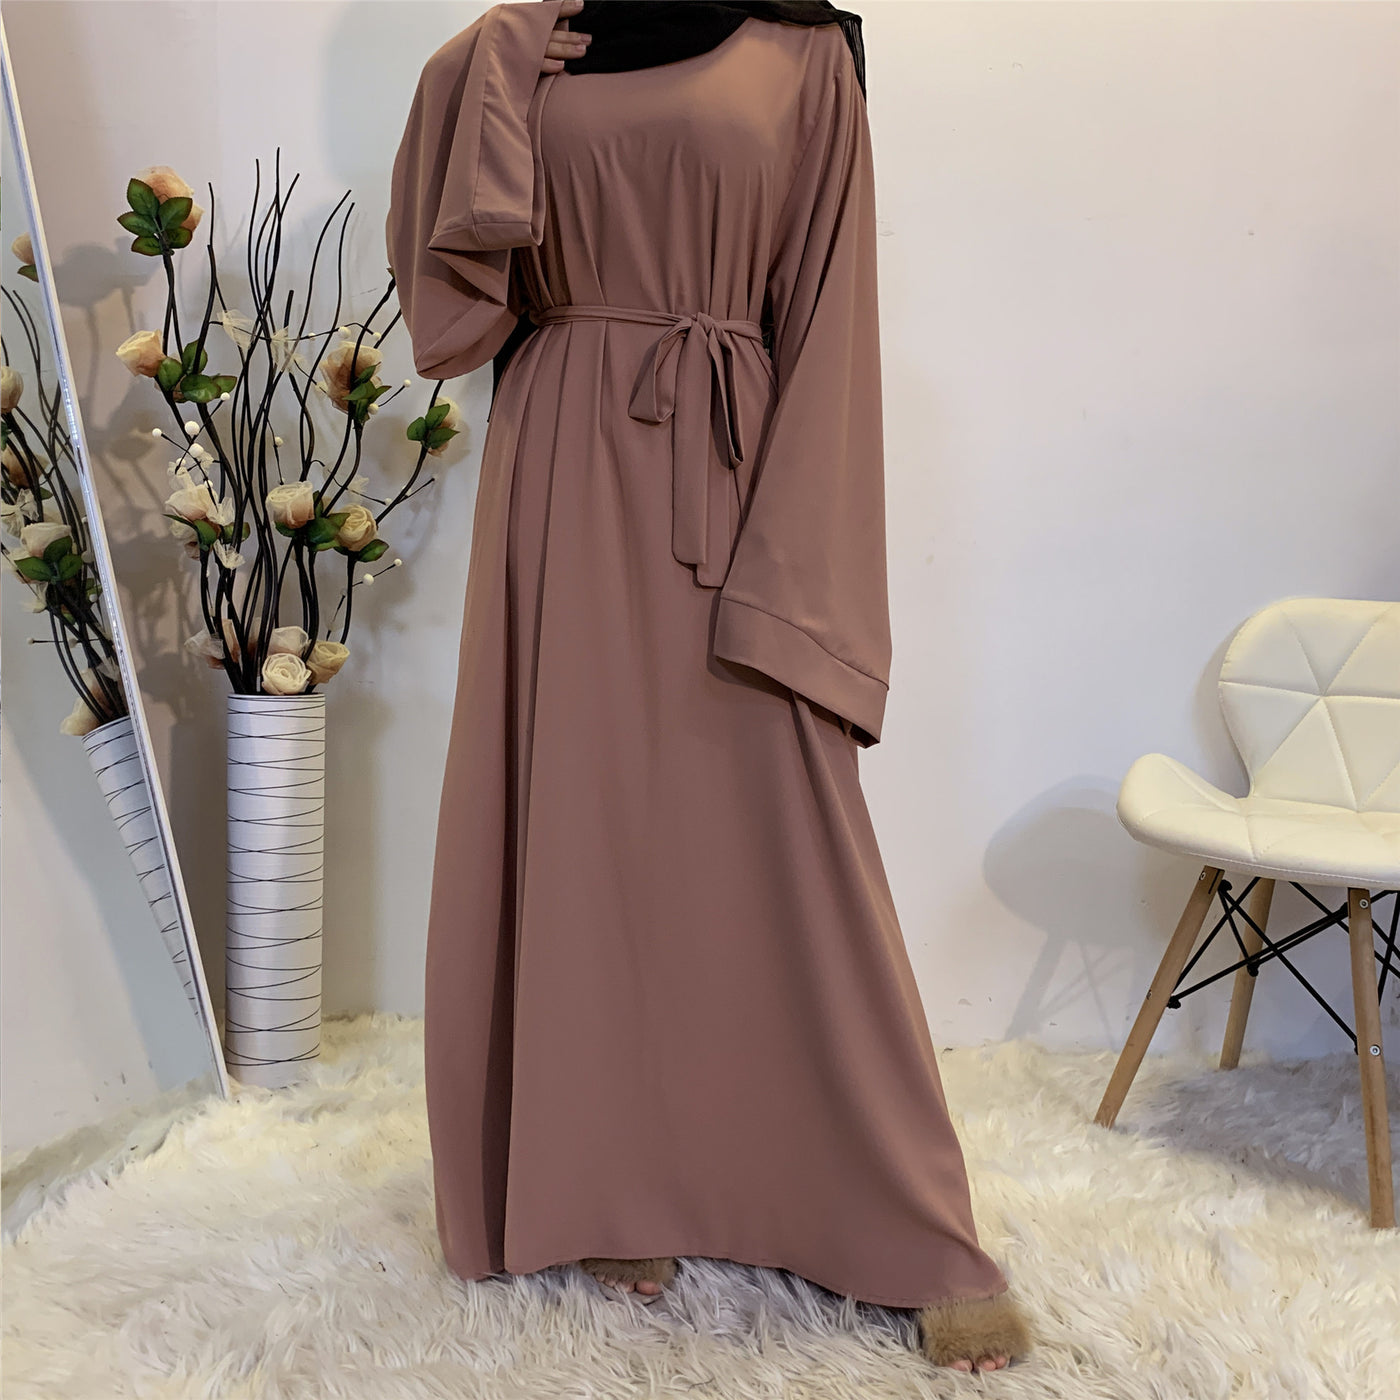 "Modest Chic: Muslim Female Dress for Fashionable Elegance"